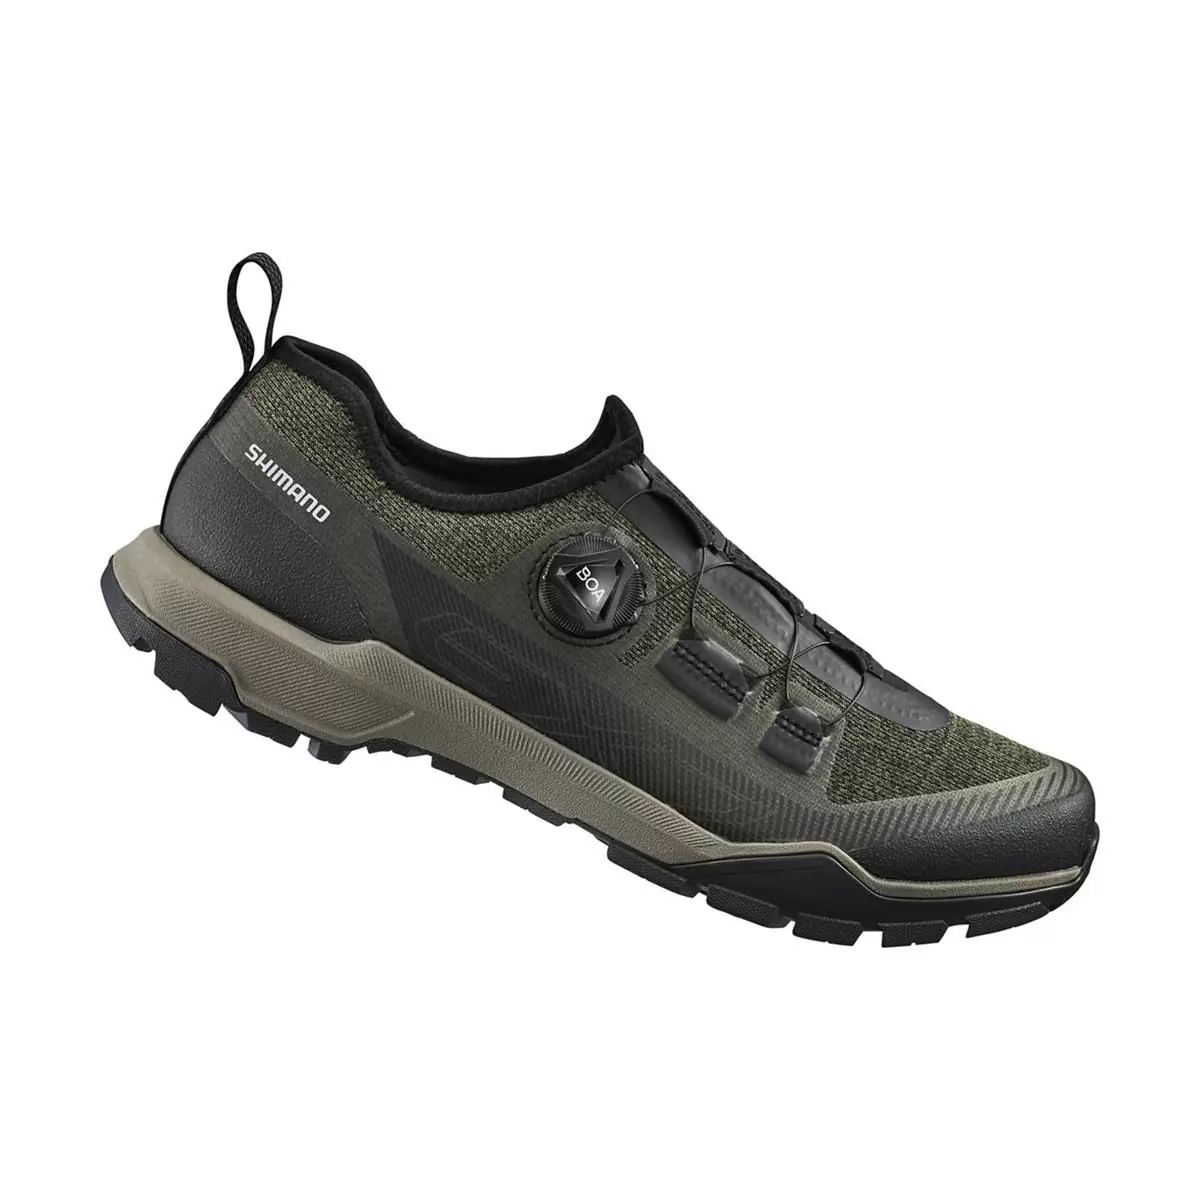 Trekking / MTB Shoes SH-EX700 Green Size 46 - image